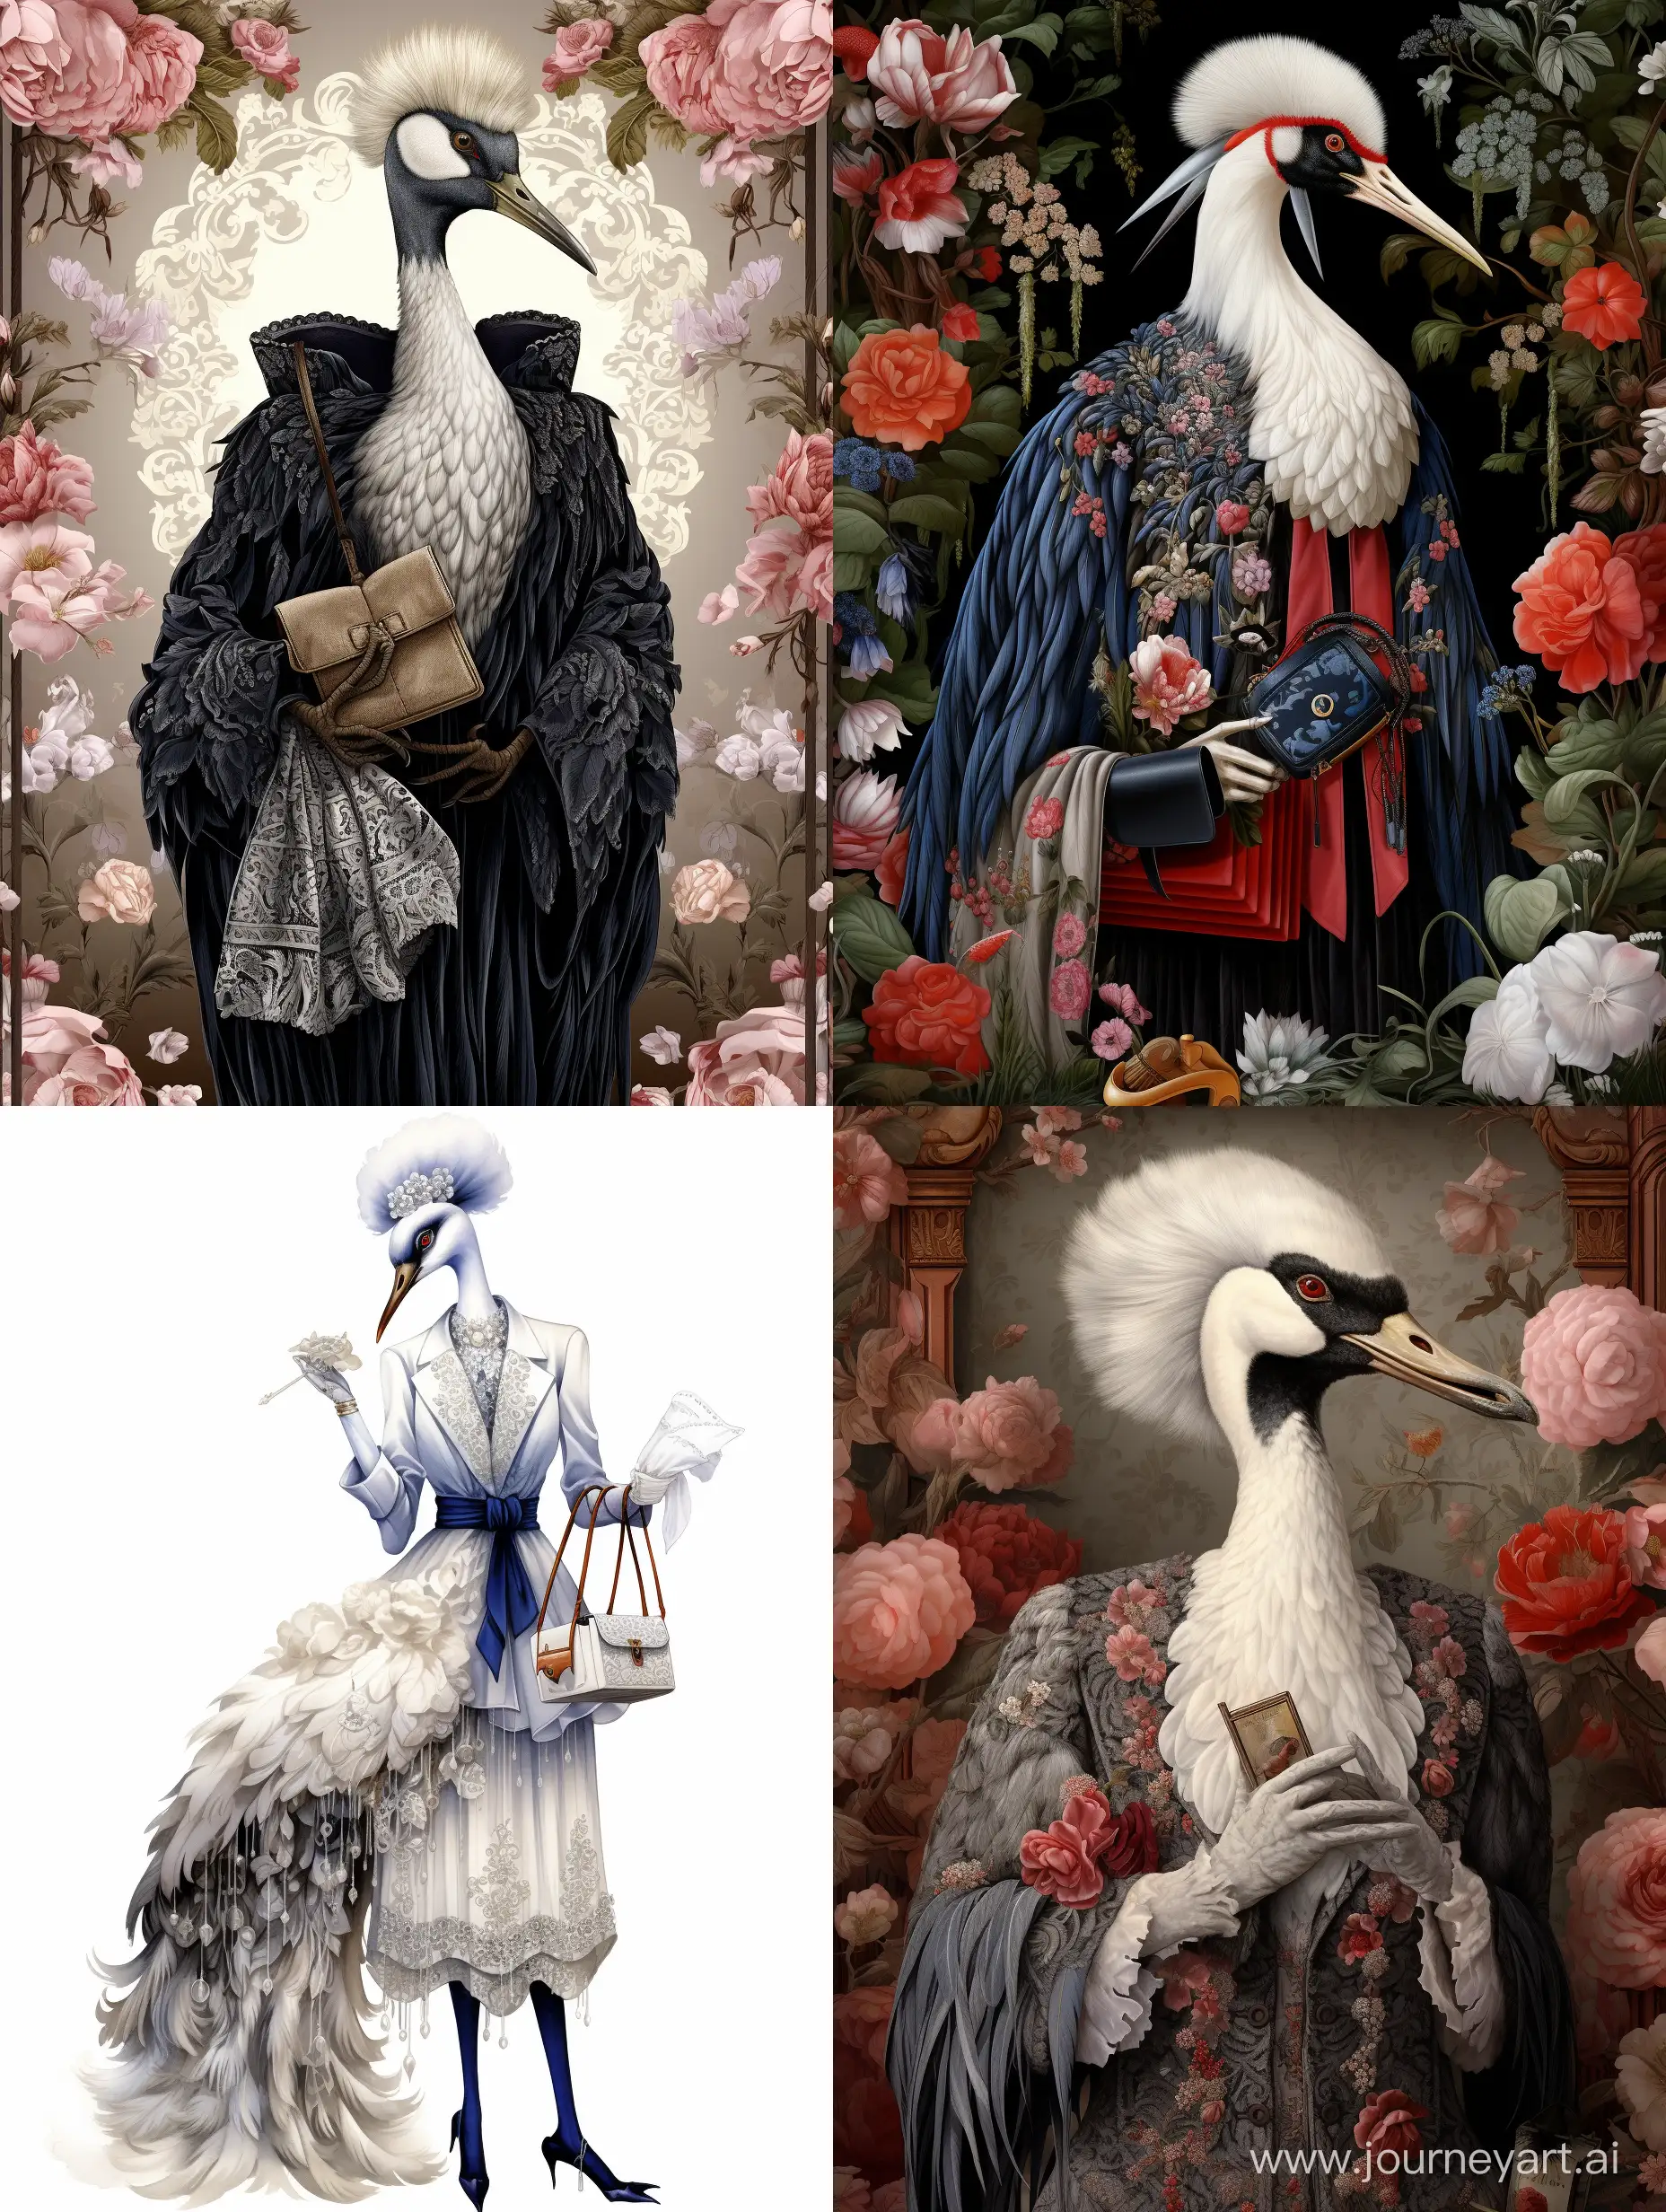 Stylish-Grus-Japonensis-Bird-in-Fashionable-Attire-with-Perfume